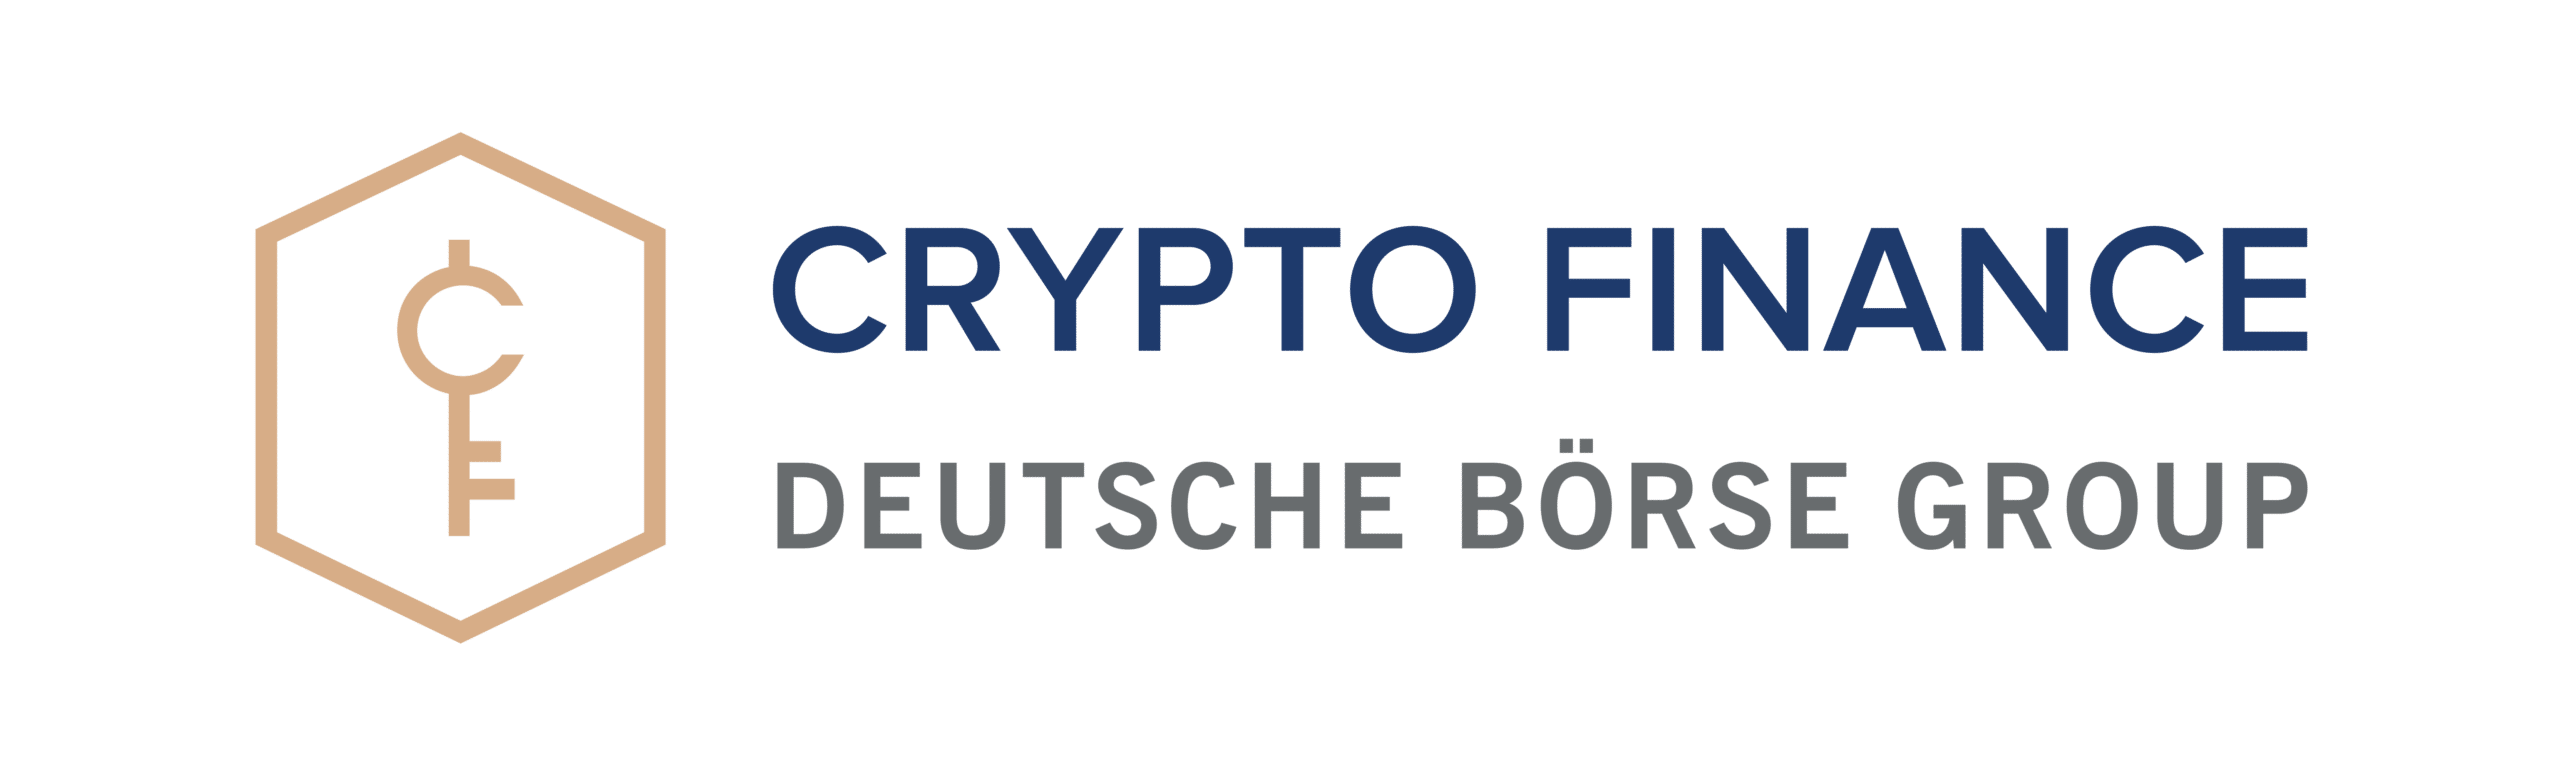 crypto-finance